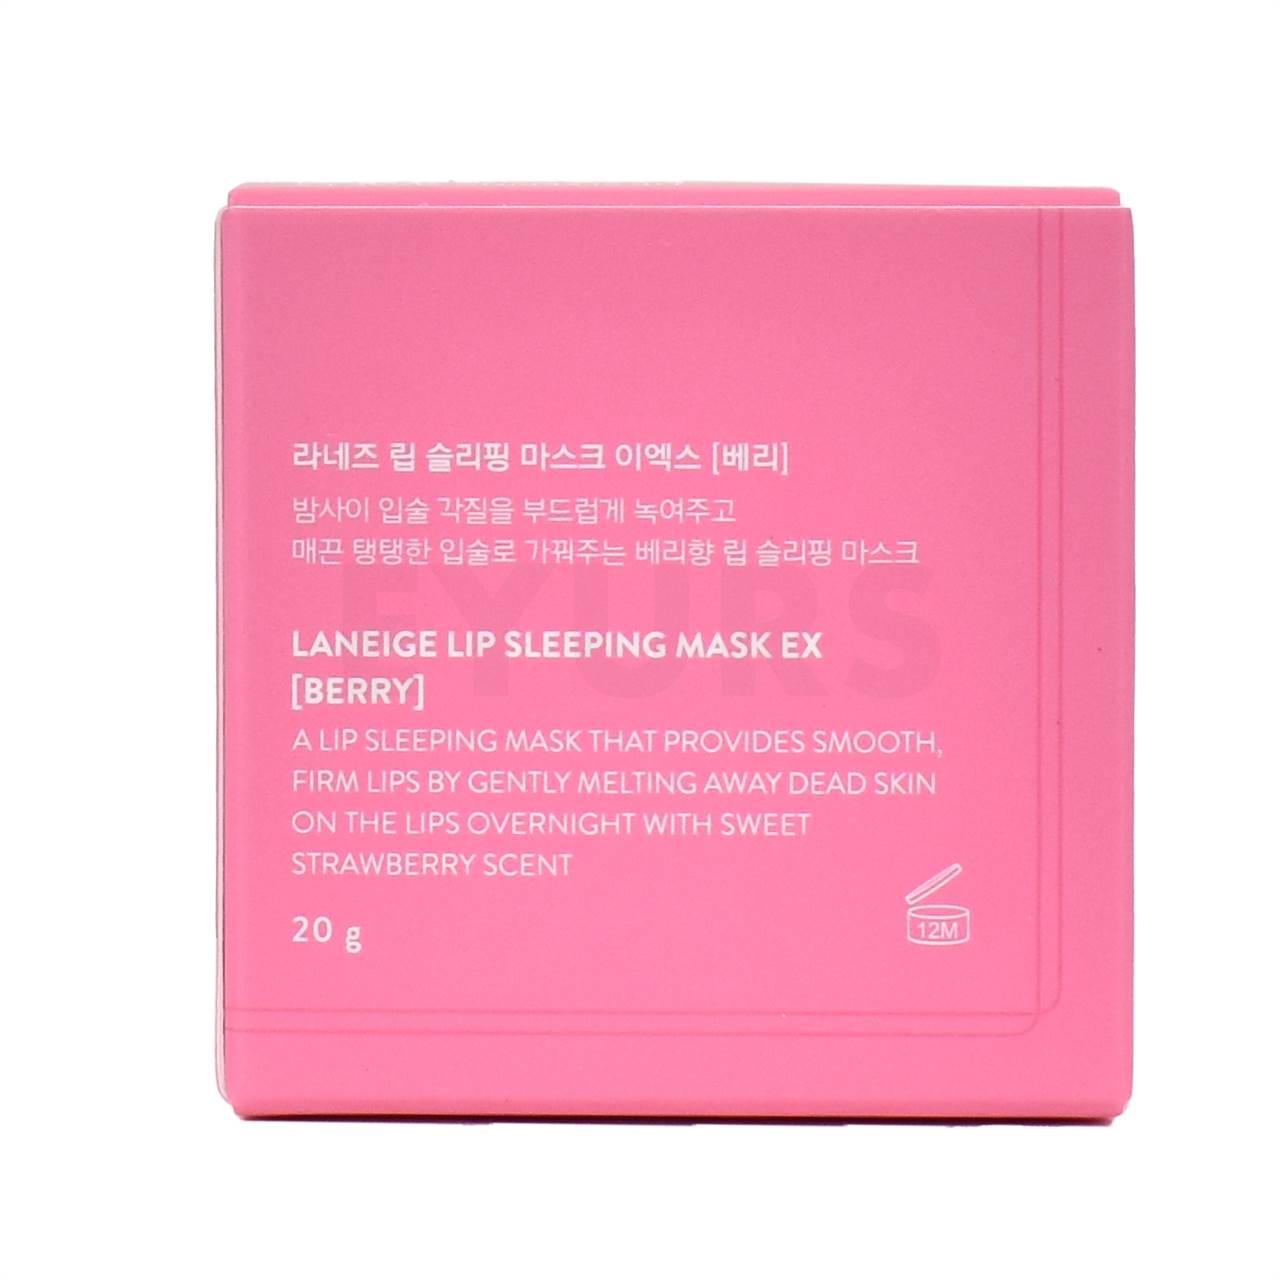 laneige lip sleeping mask berry ex 20g back side packaging